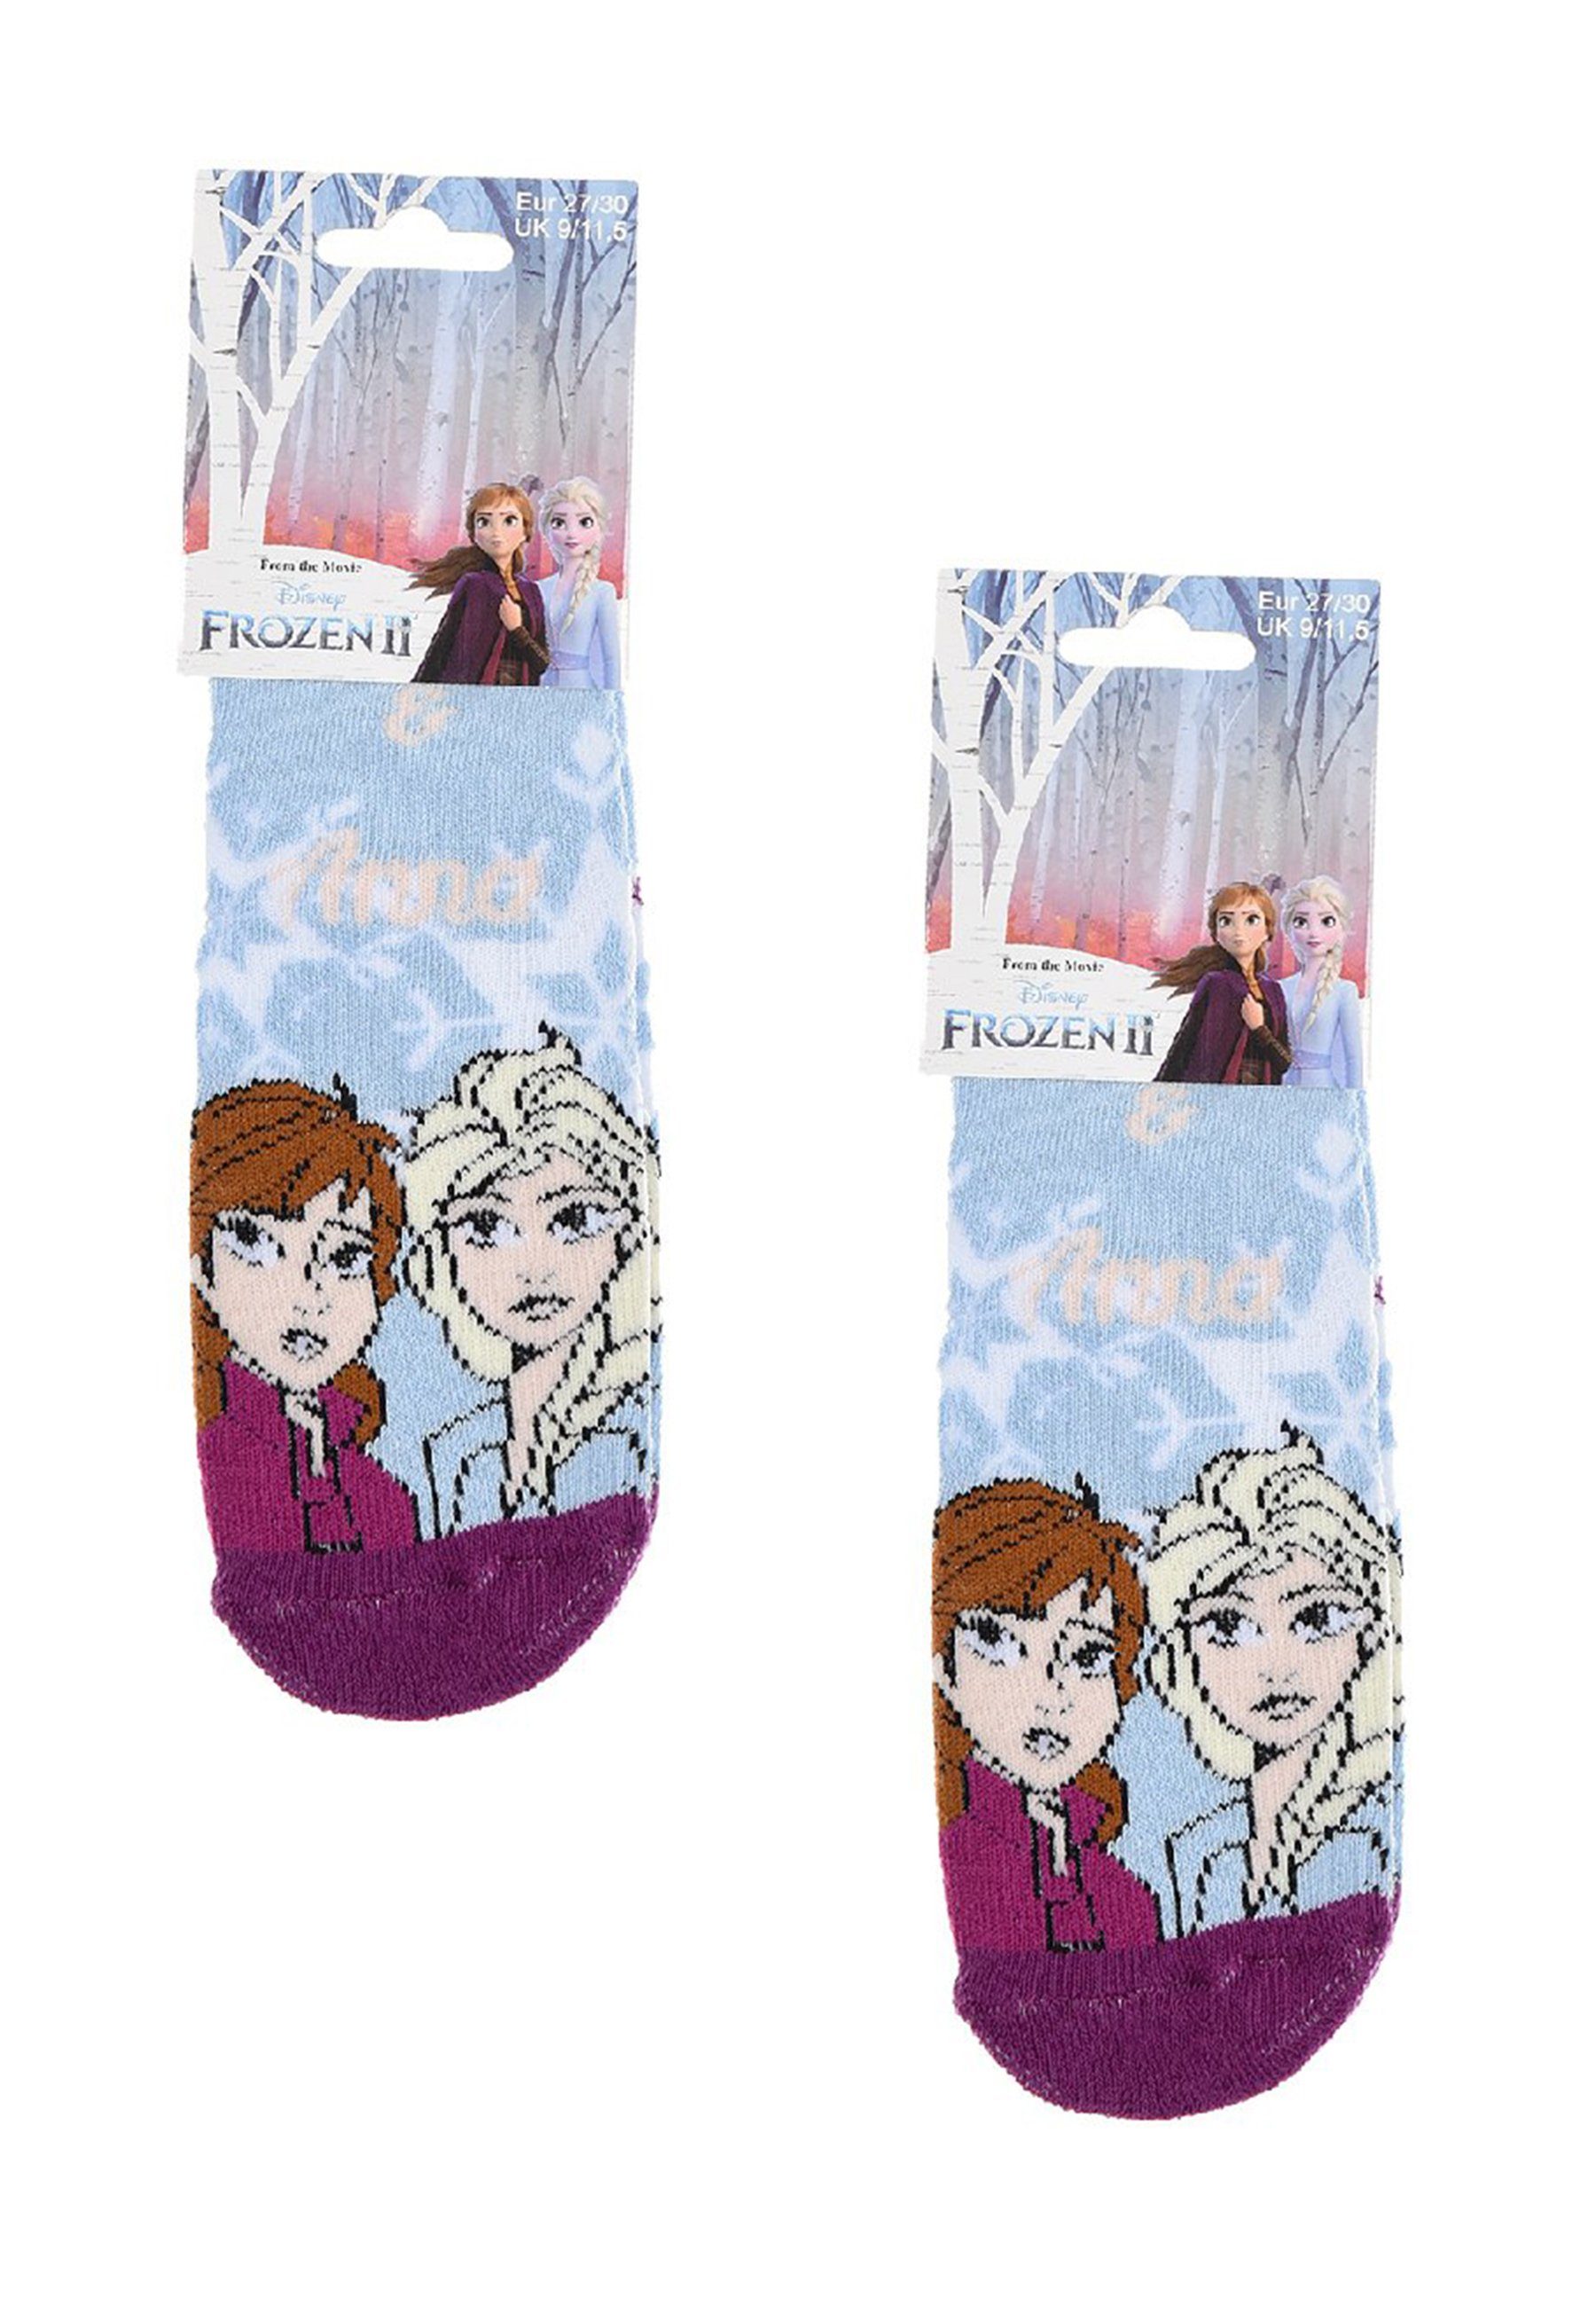 Wäsche Stoppersocken Disney Frozen ABS-Socken Eiskönigin Kinder Mädchen Socken 2 Paar Gumminoppen Stopper-Socken Strümpfe (2-Paa